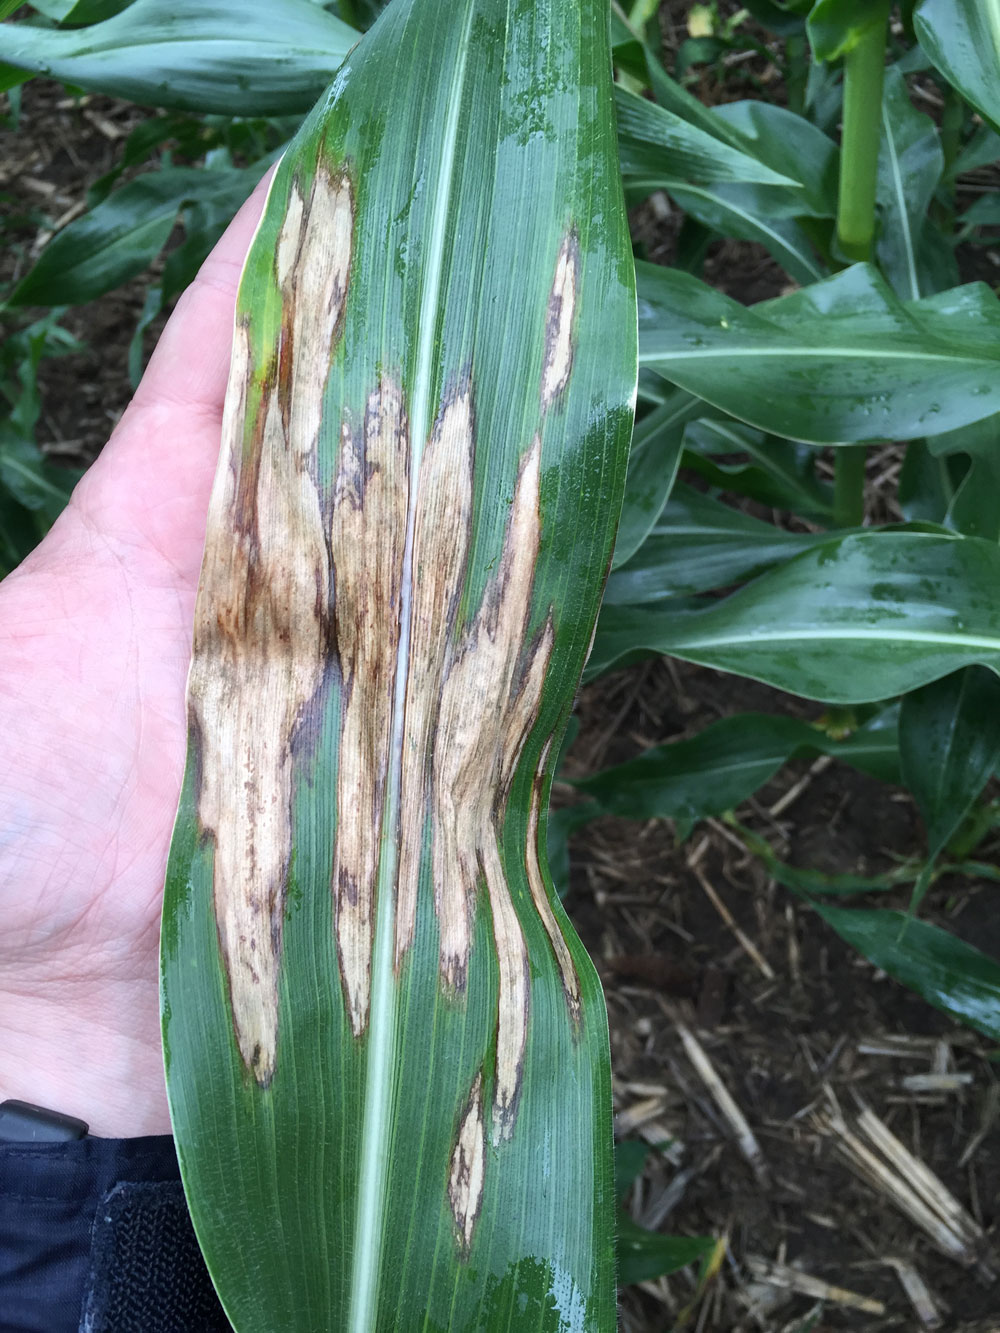 Corn ear showing symptoms of Northern corn leaf blight